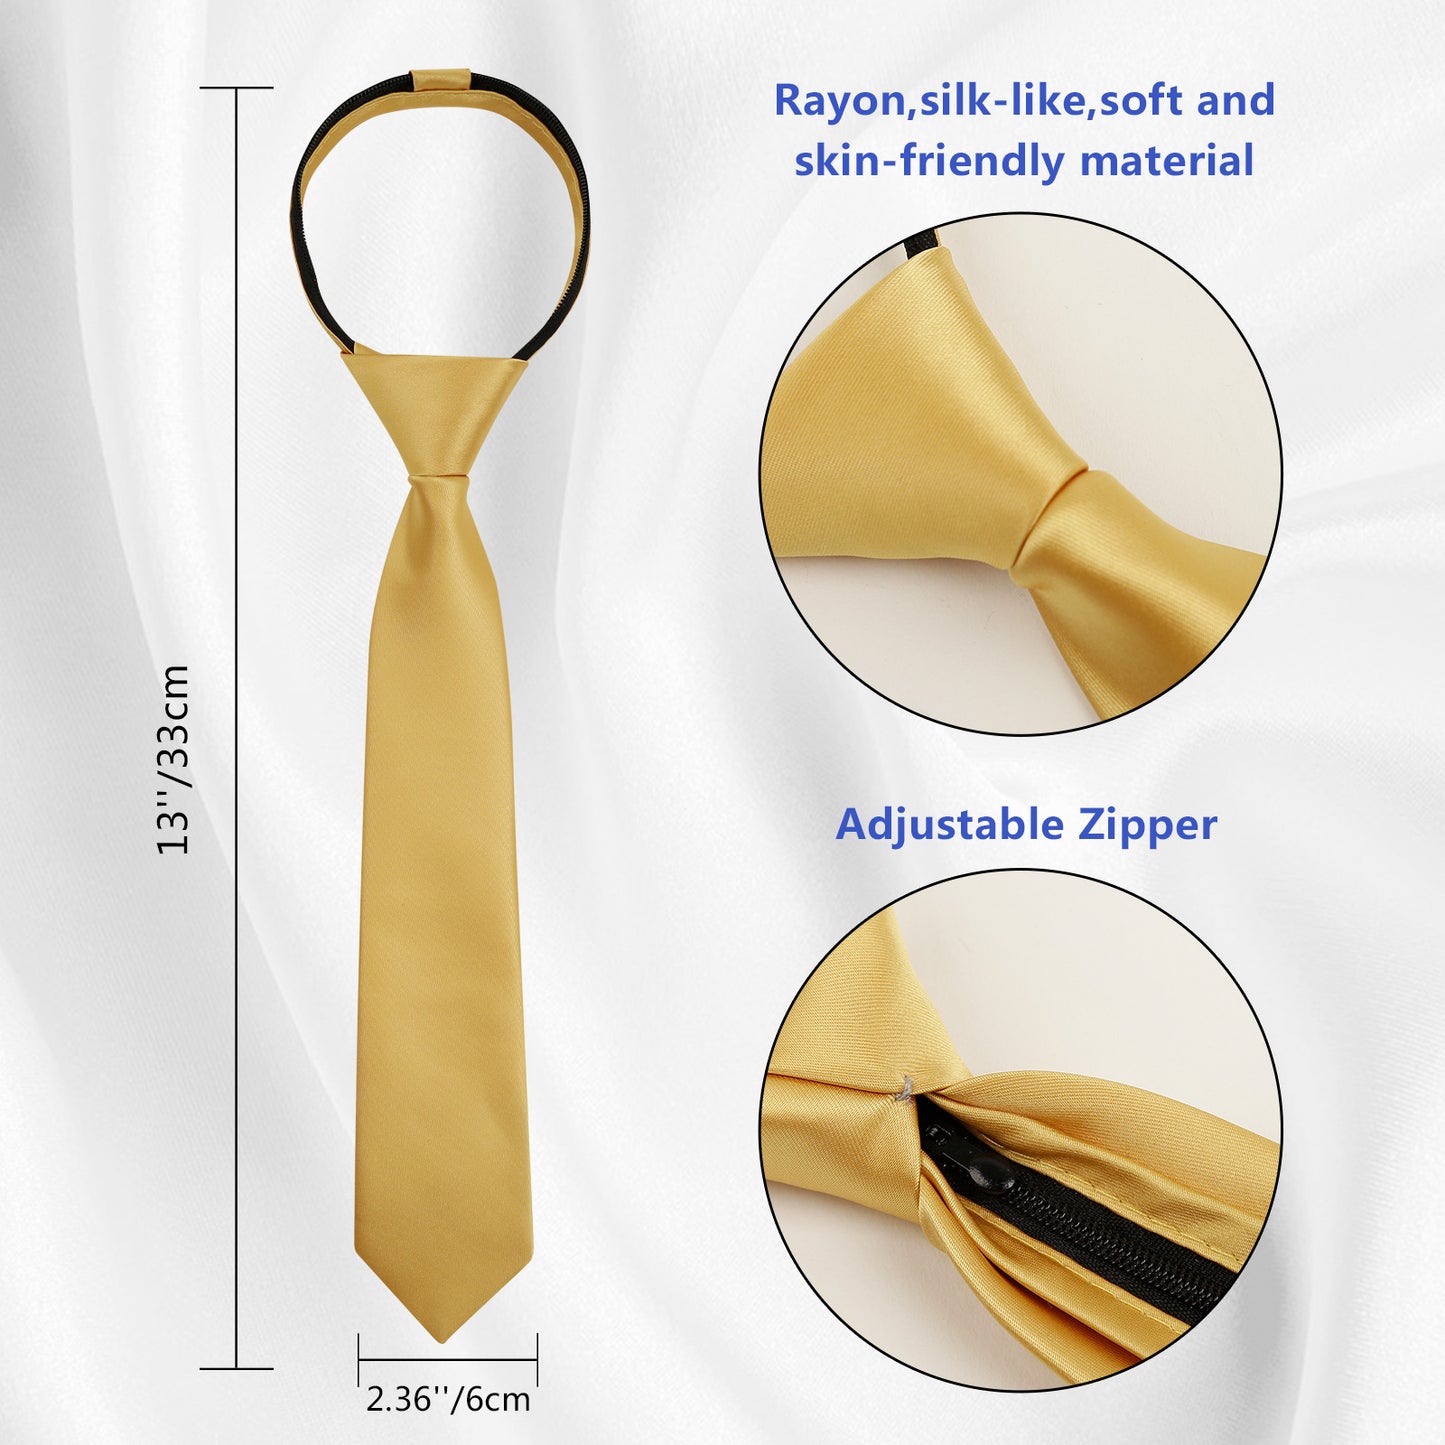 Boy's Classic Solid Bow Tie, Necktie and Suit Vest Set, 078-Golden